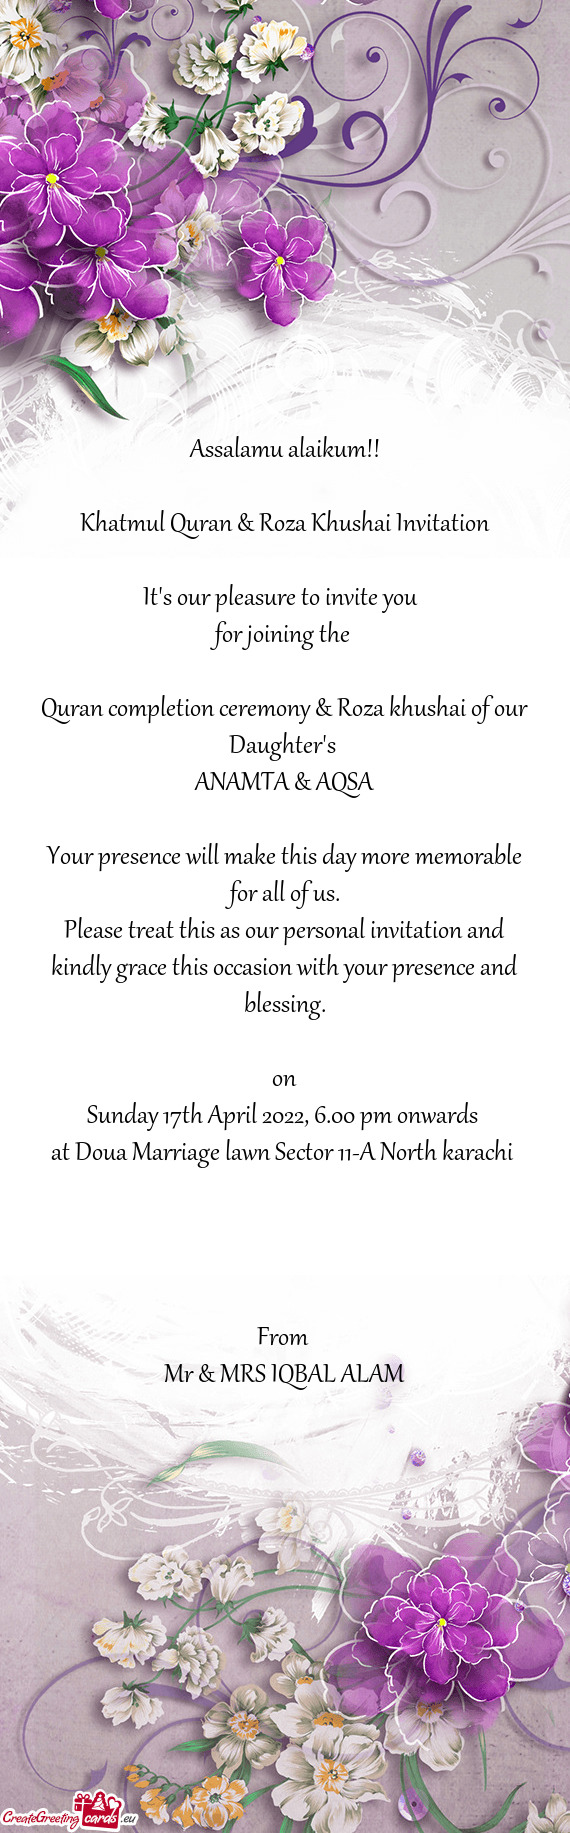 Khatmul Quran & Roza Khushai Invitation